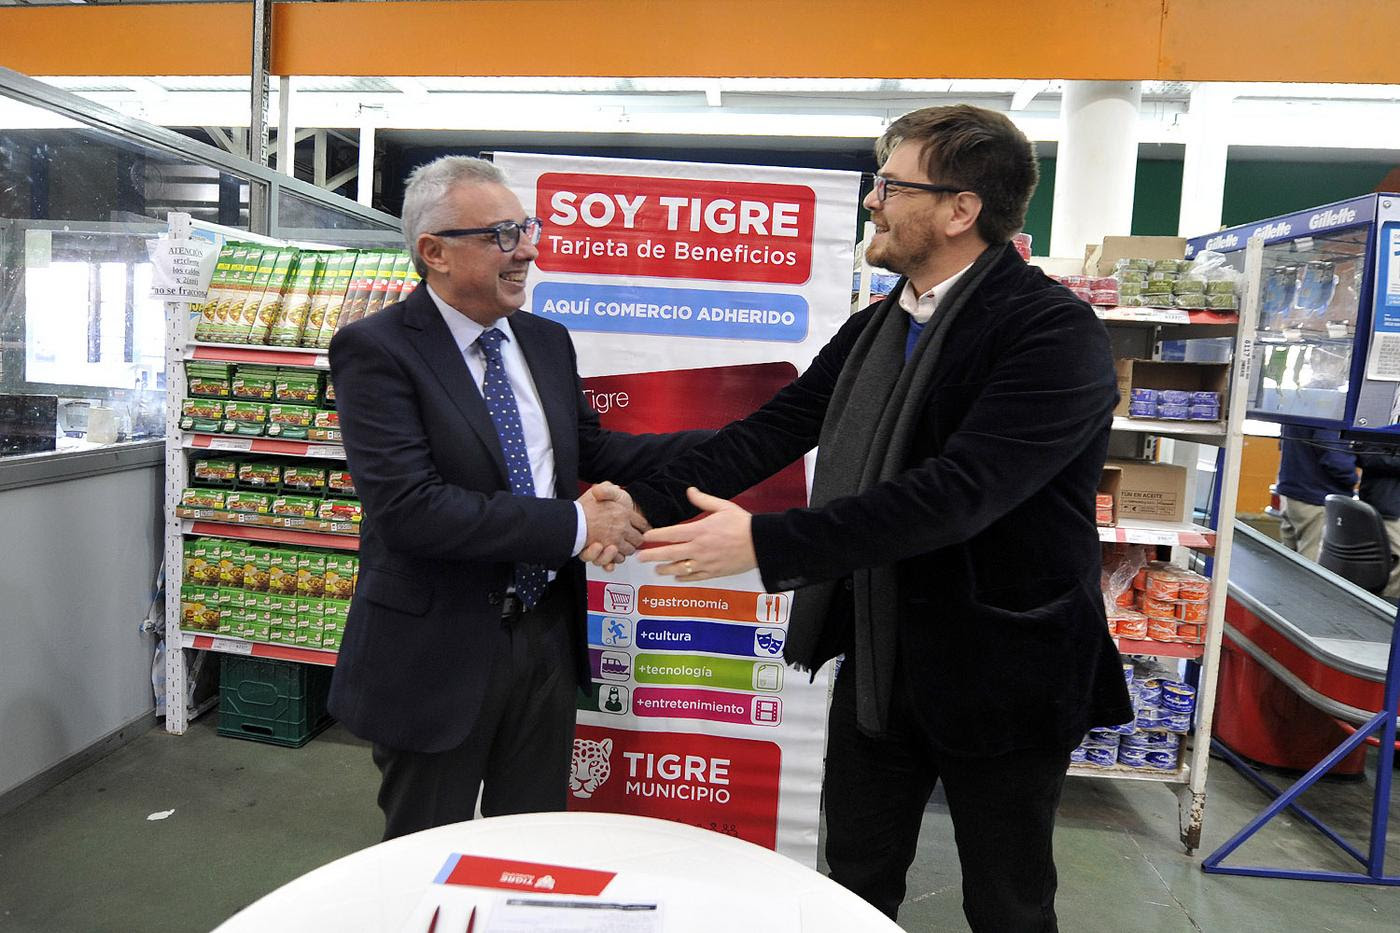  La tarjeta de beneficios “Soy Tigre” suma al supermercado mayorista Yaguar